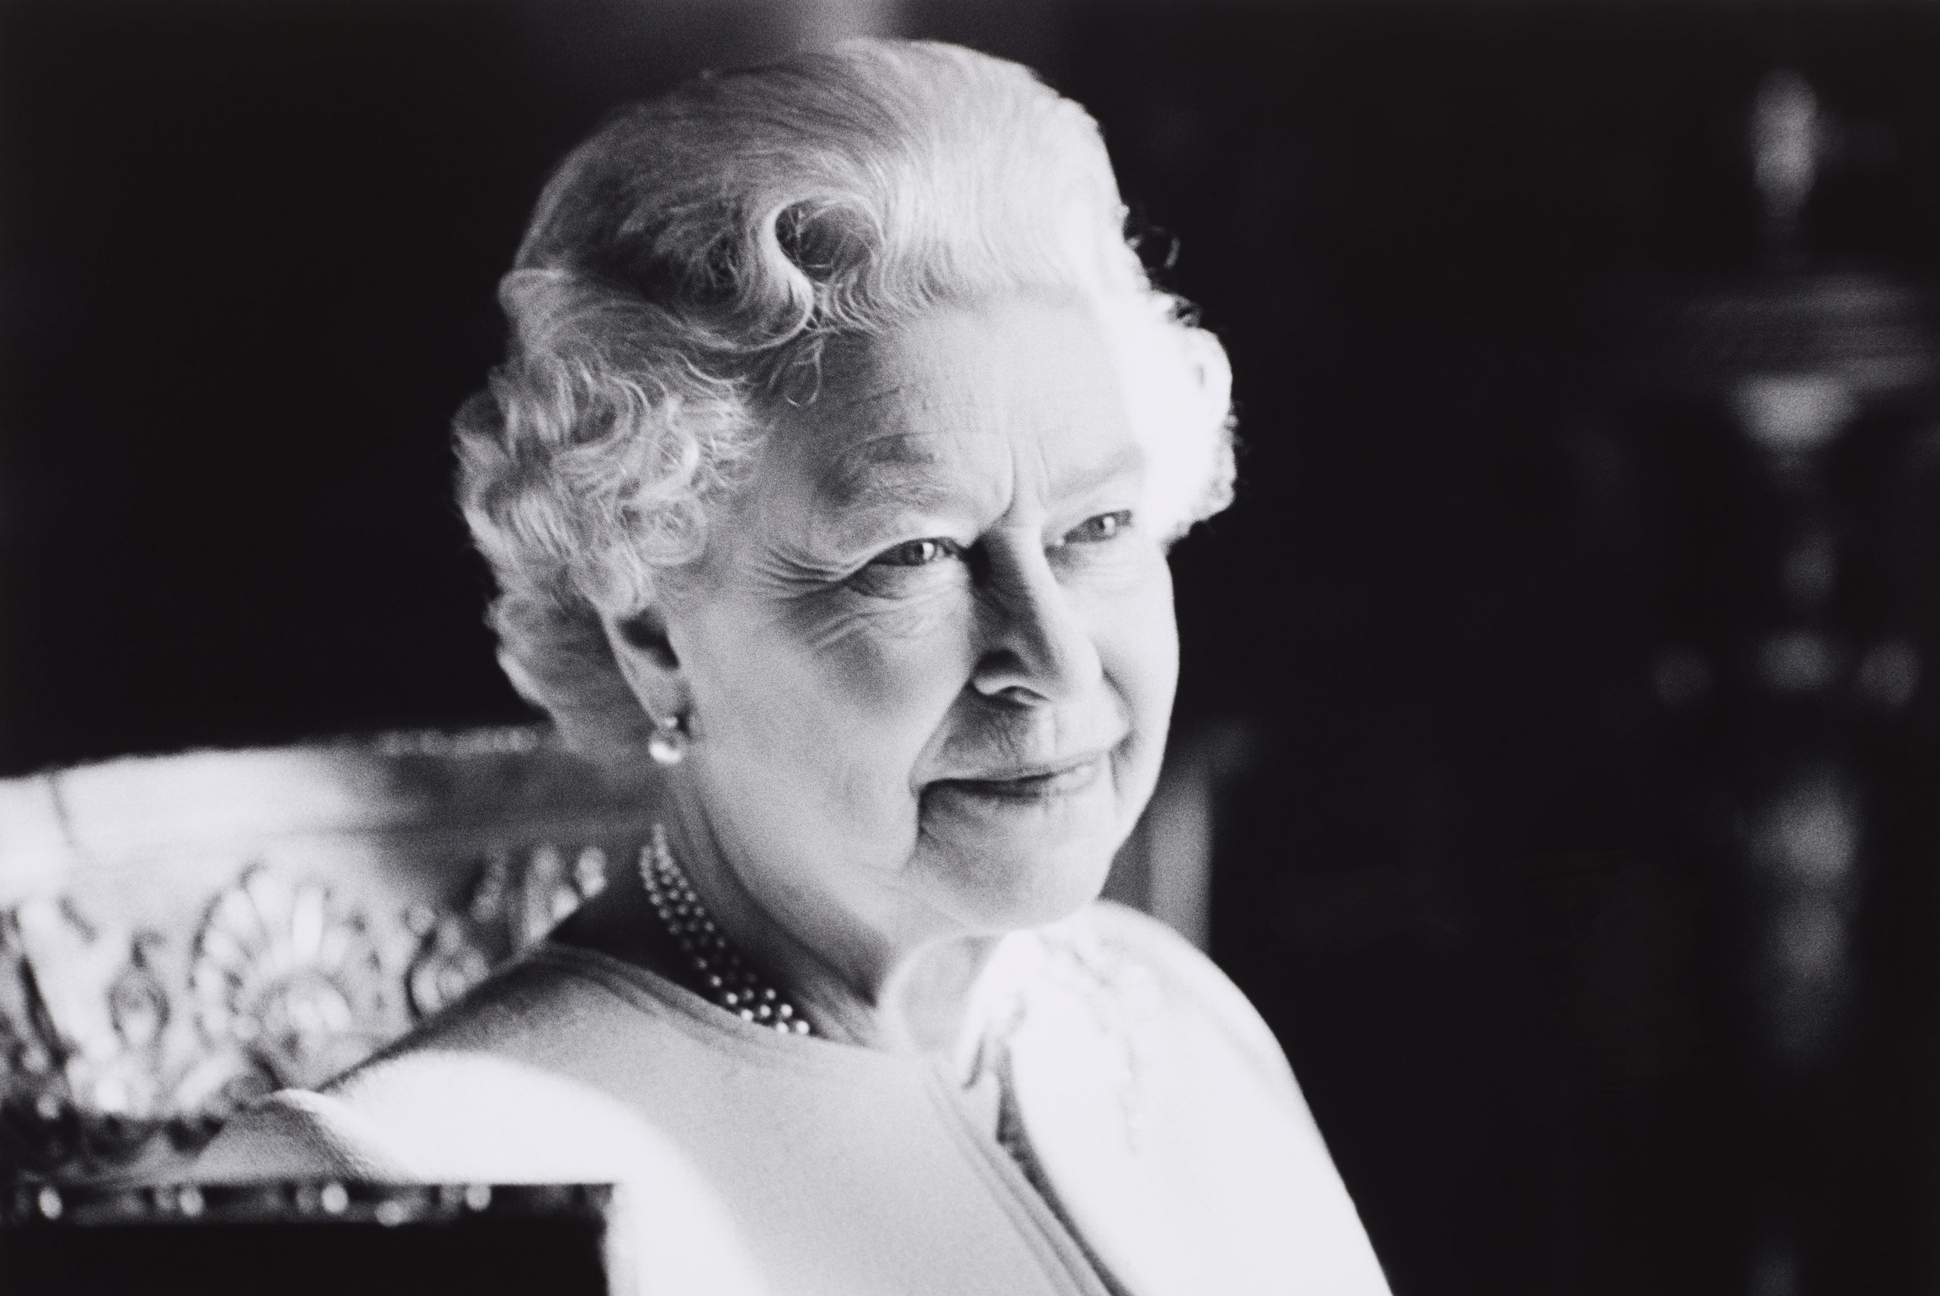 Britain’s longest serving monarch Queen Elizabeth II dies at 96